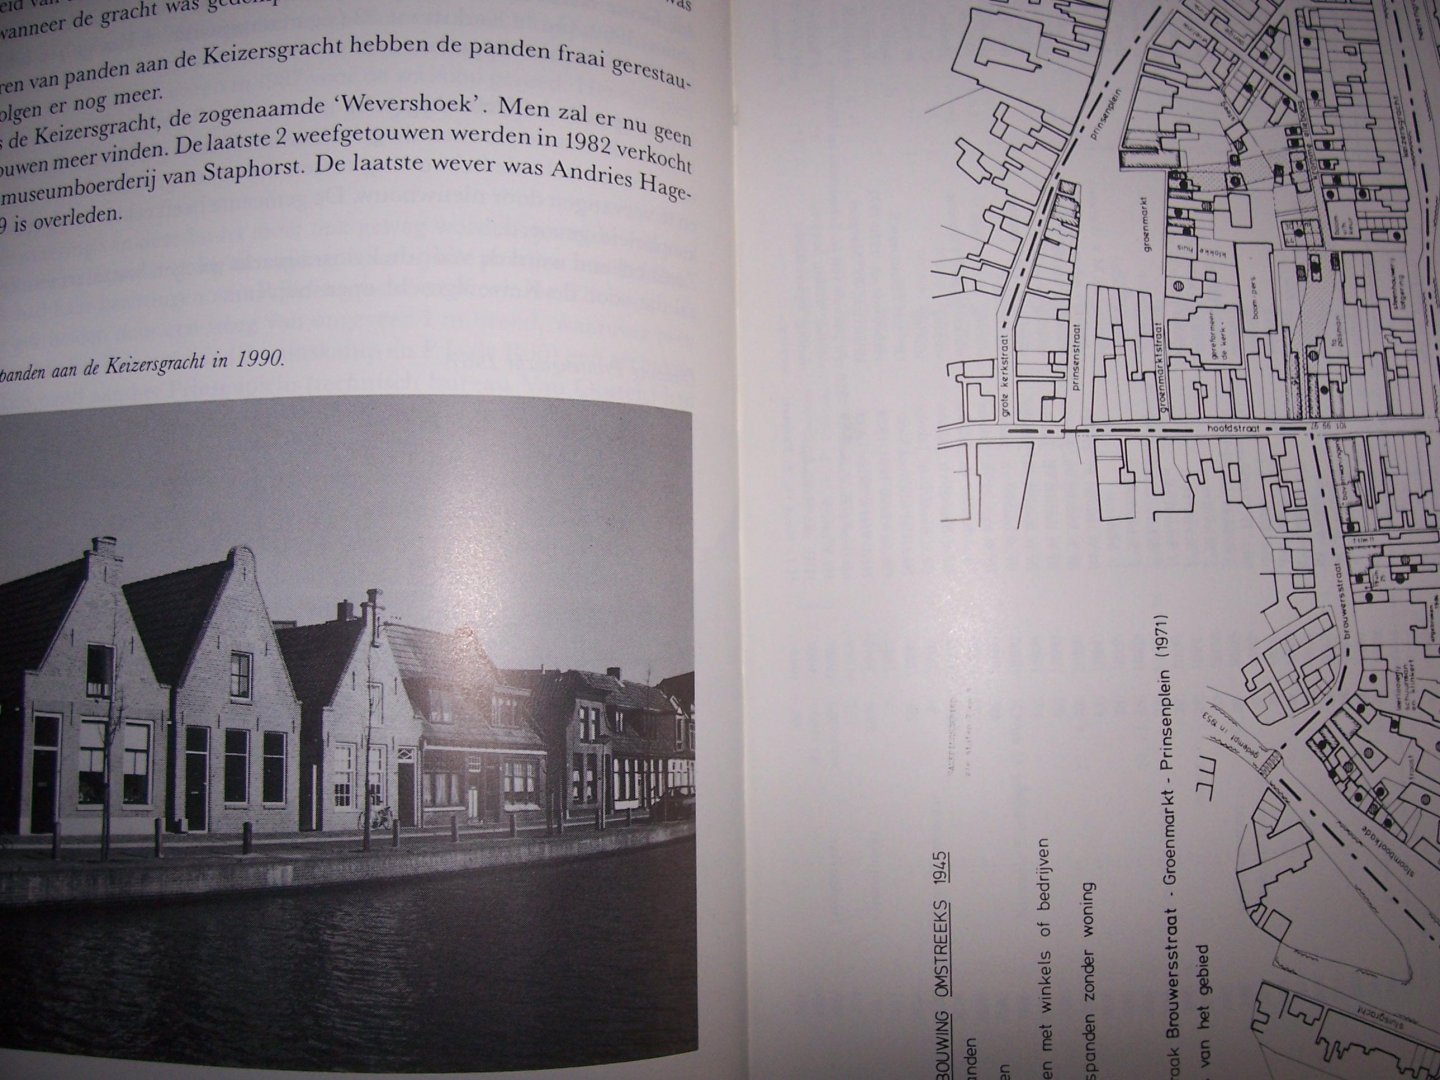 Heide, Roelof ter - Breken en bouwen in Meppel 1945-1990 / Sanering en vernieuwing binnenstad